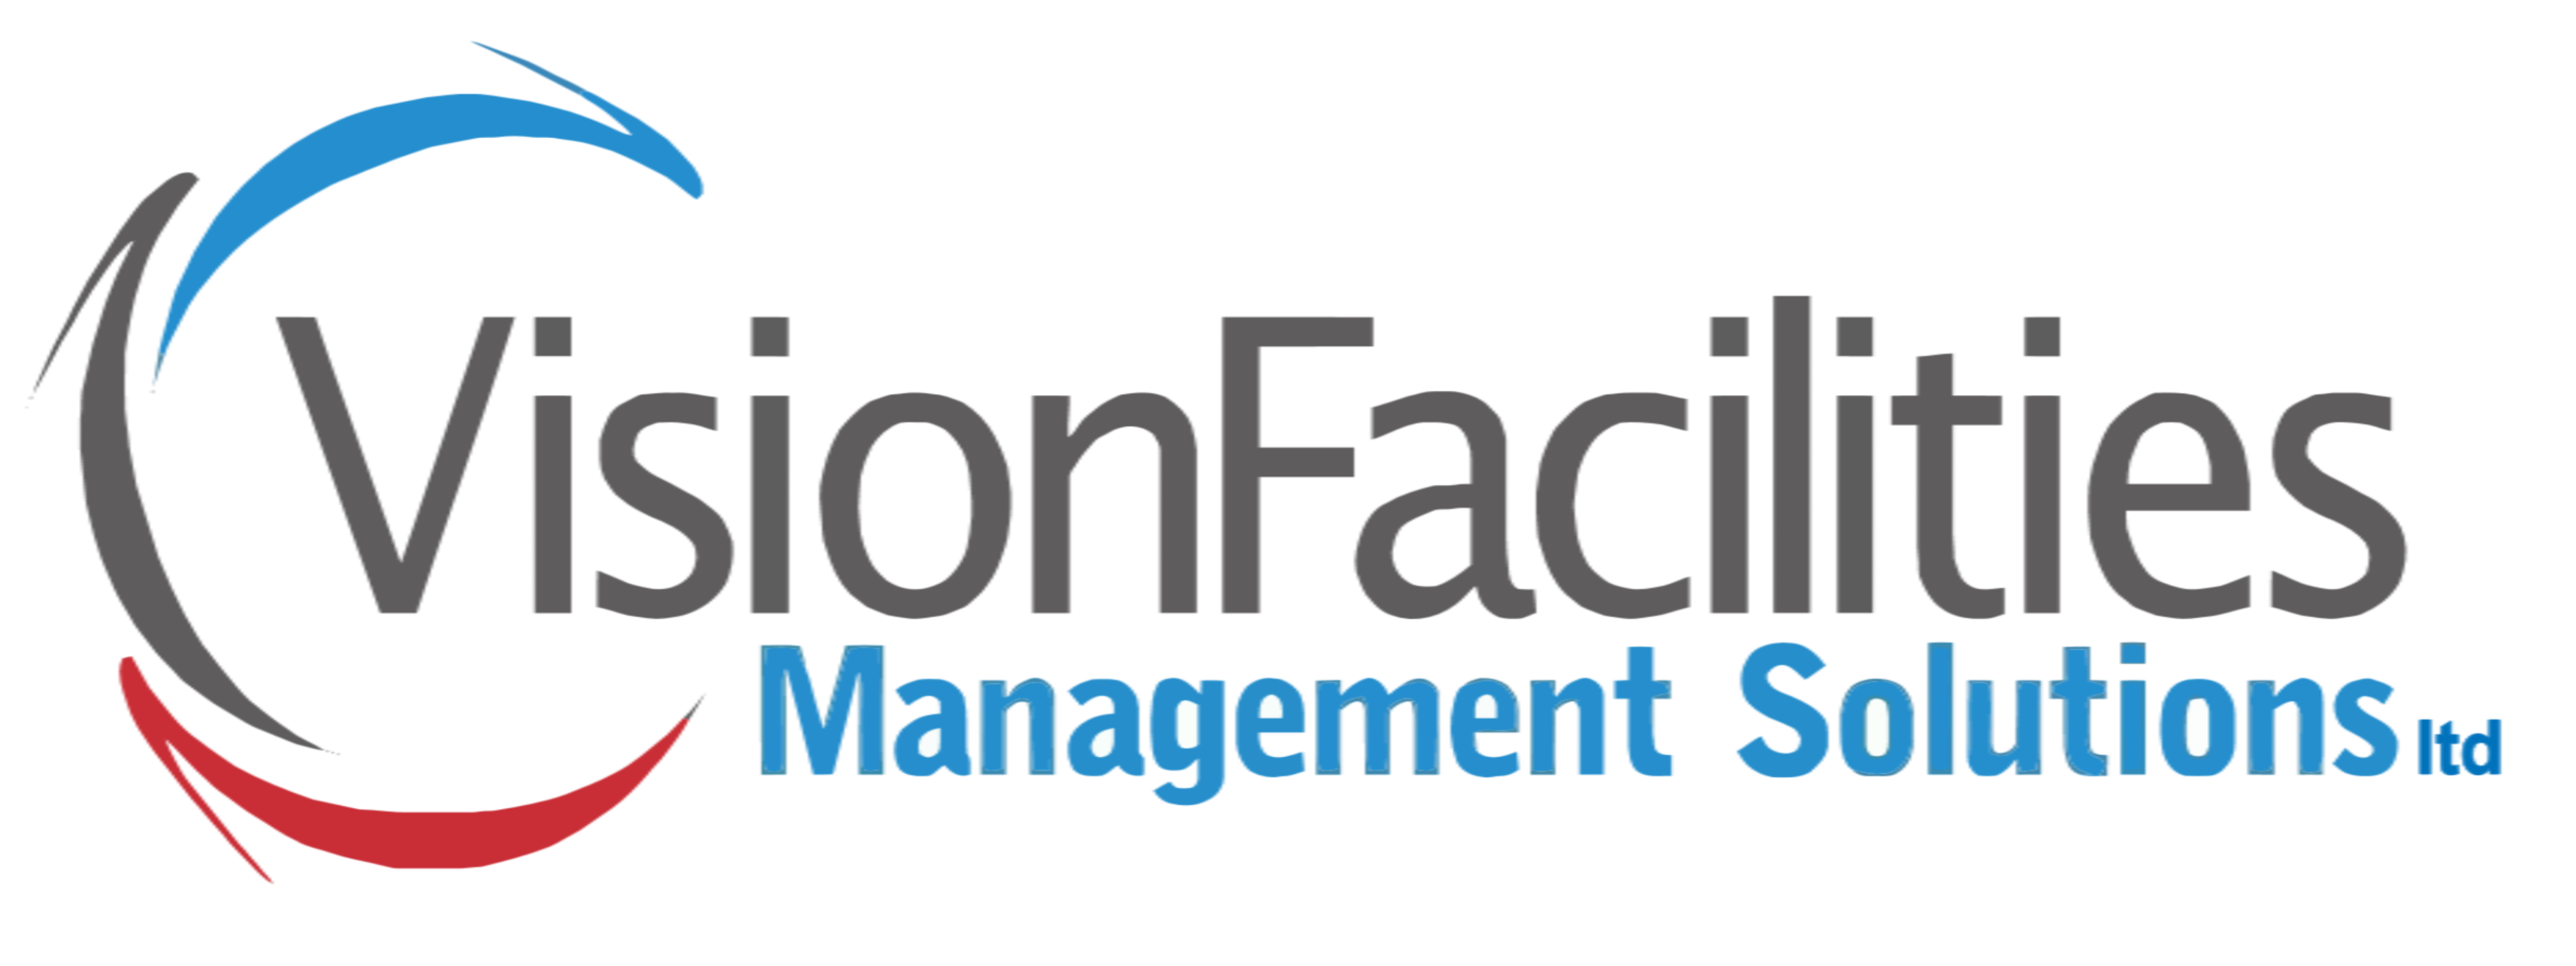 Vision Facilities Management Solutions Ltd.